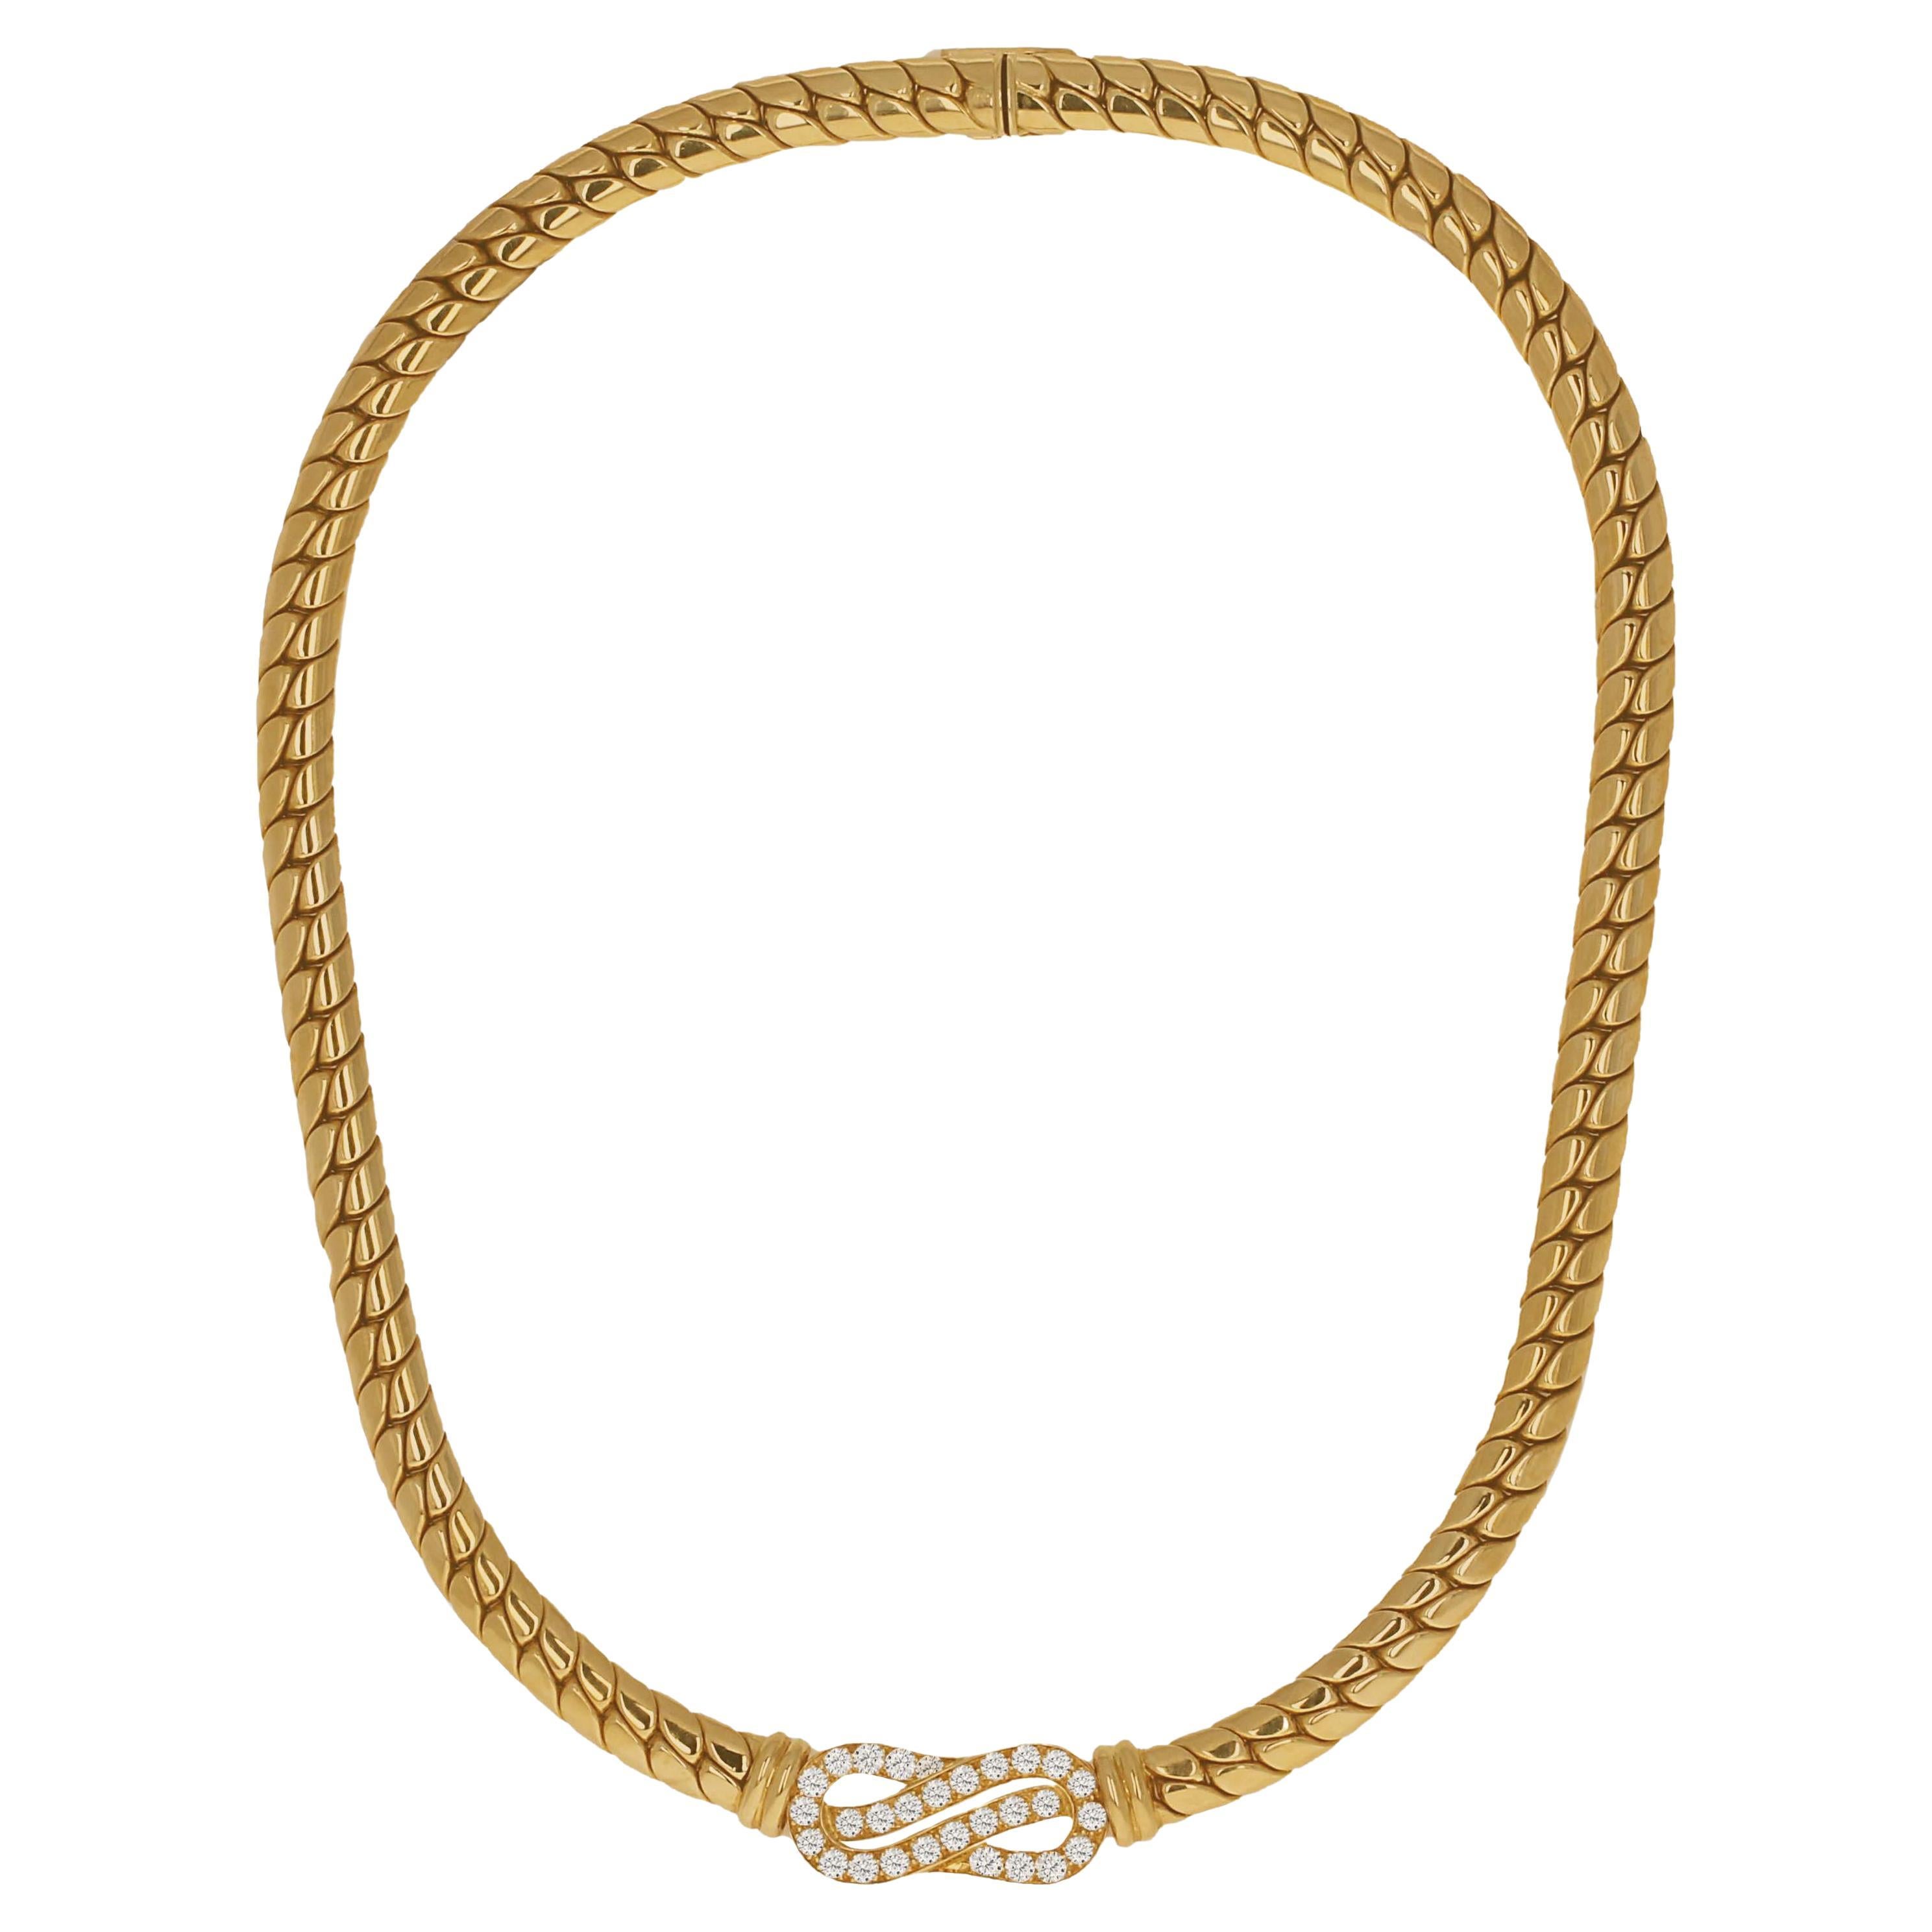 Van Cleef & Arpels "VCA" 18 Karat Yellow Gold and Diamond Necklace